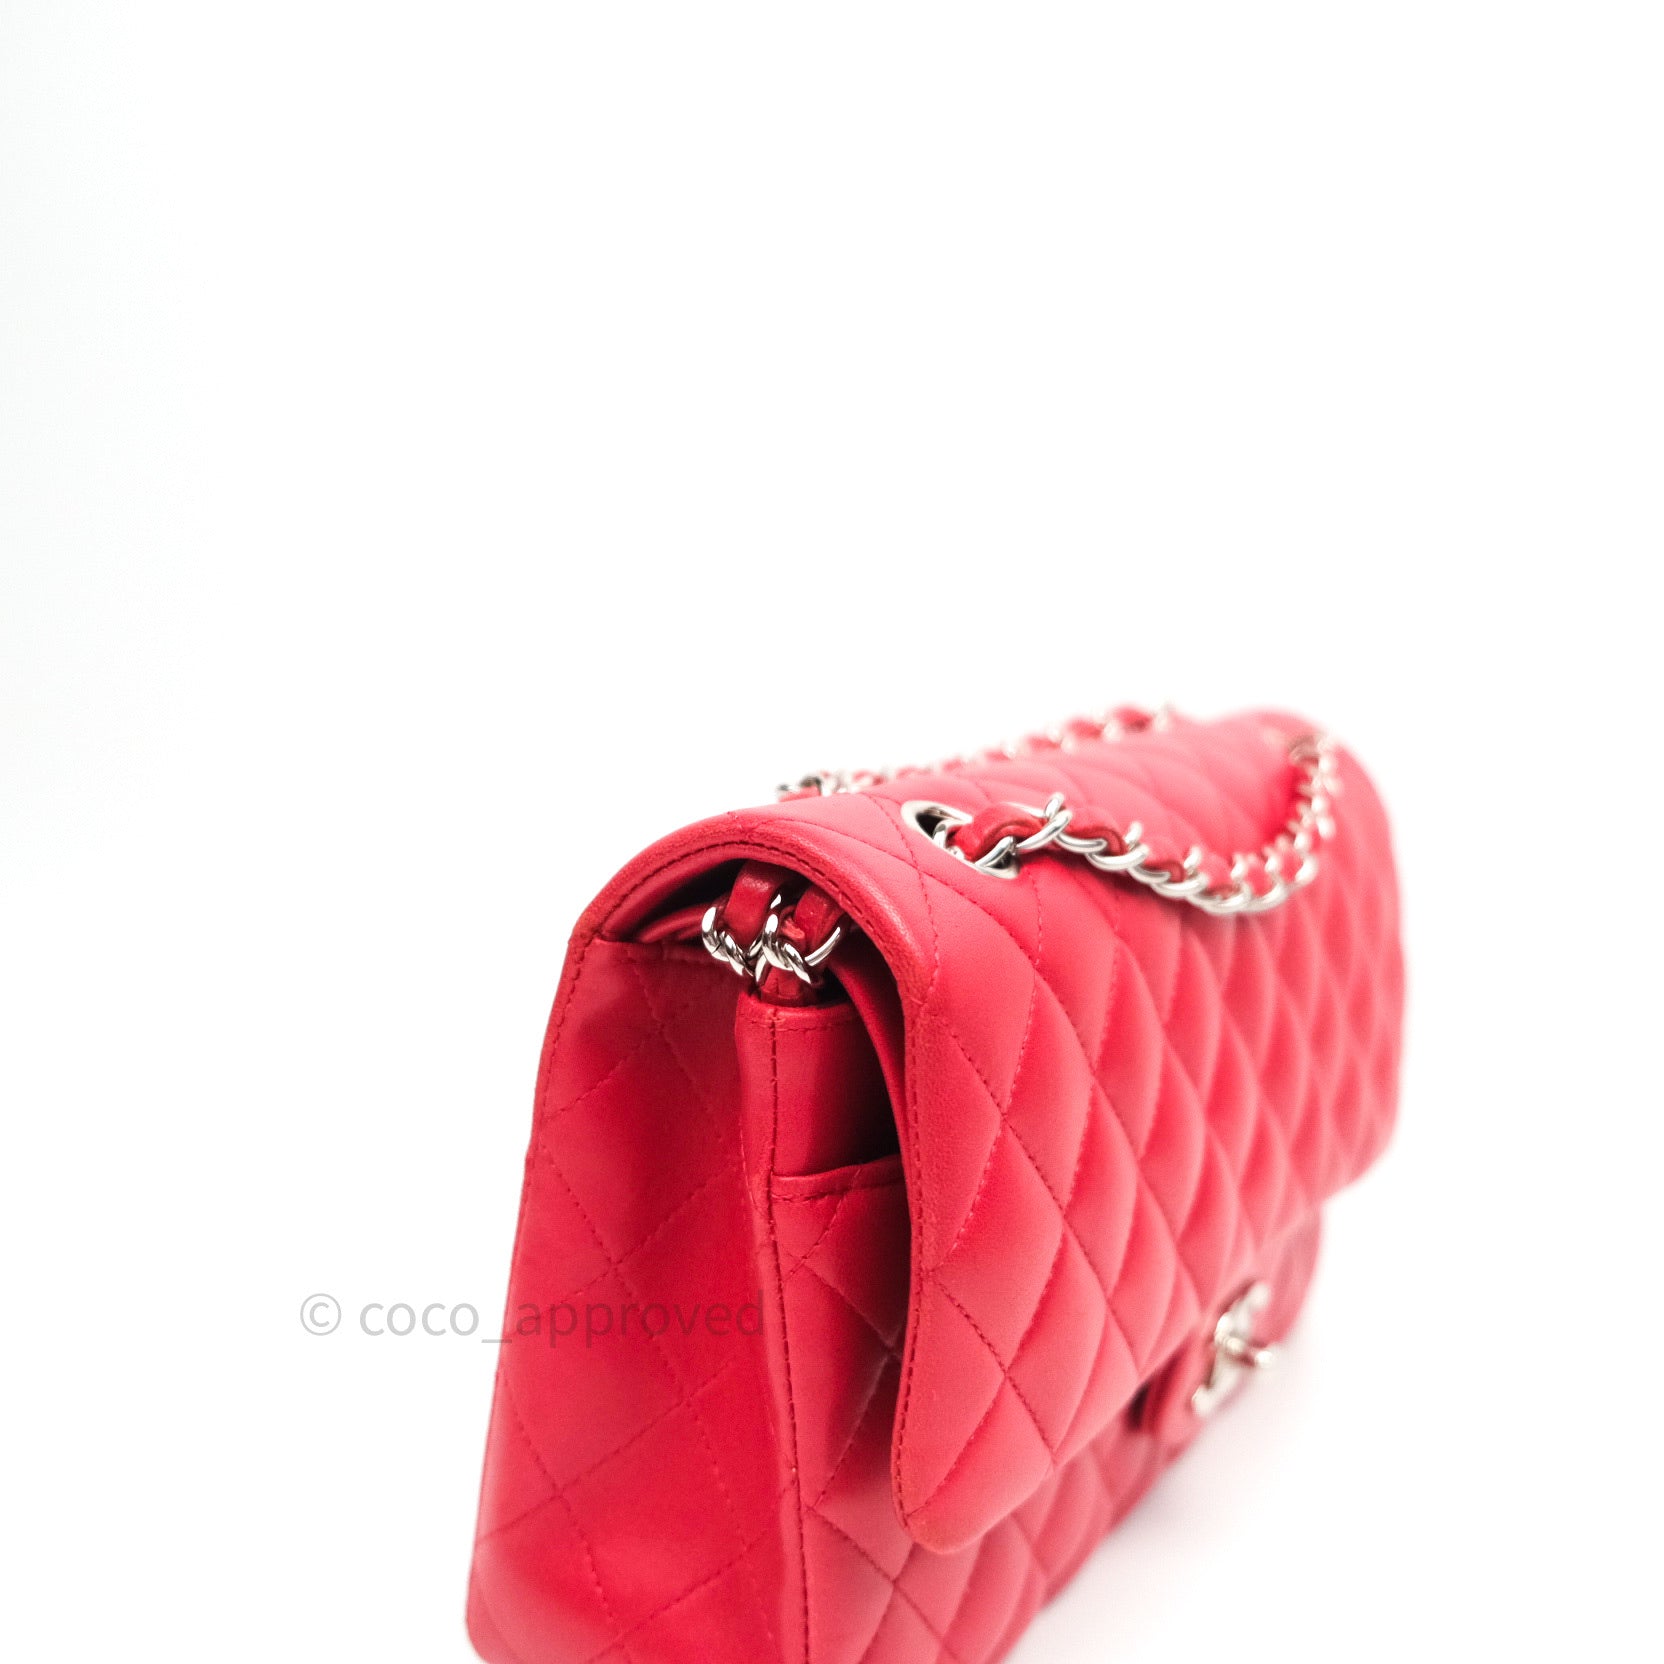 Chanel M/L Medium Flap Bag Valentine Limited Edition Pink Lambskin Gol –  Coco Approved Studio